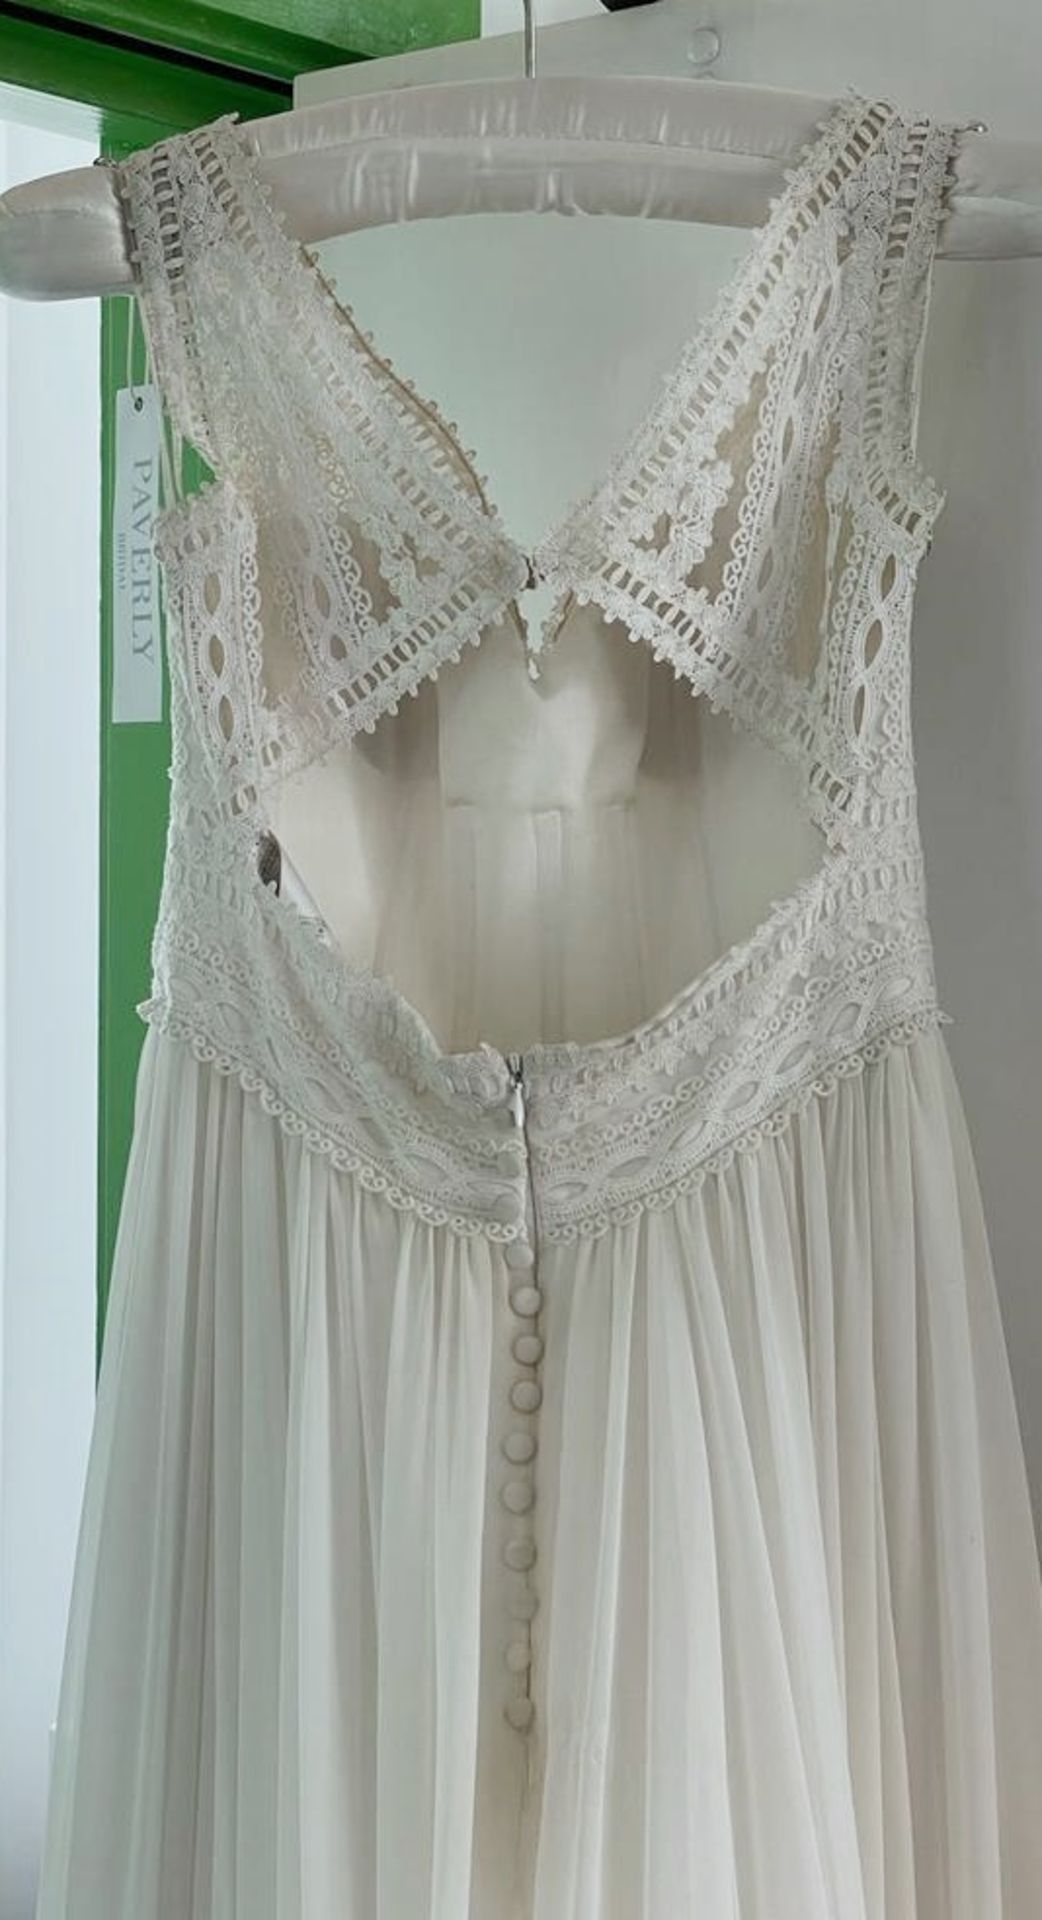 1 x PRONOVIAS 'Dramia' Designer Crocheted Lace Wedding Dress Bridal Gown, With Chiffon Gathered - Image 8 of 20